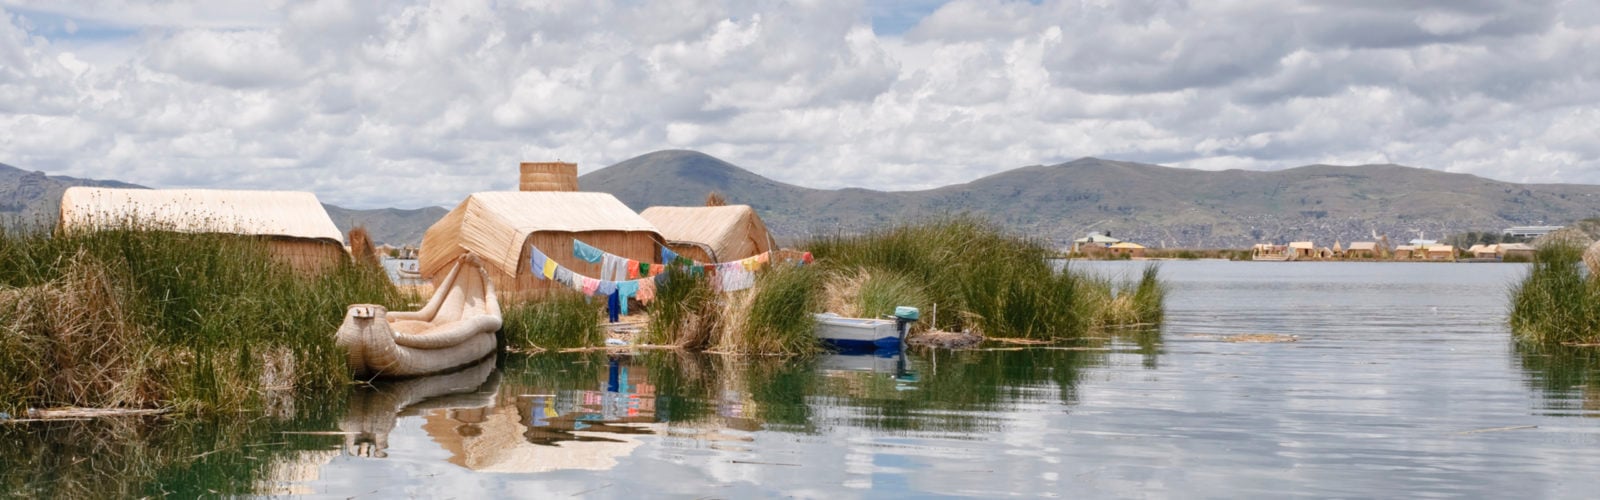 lake-titicaca-peru-reed-island